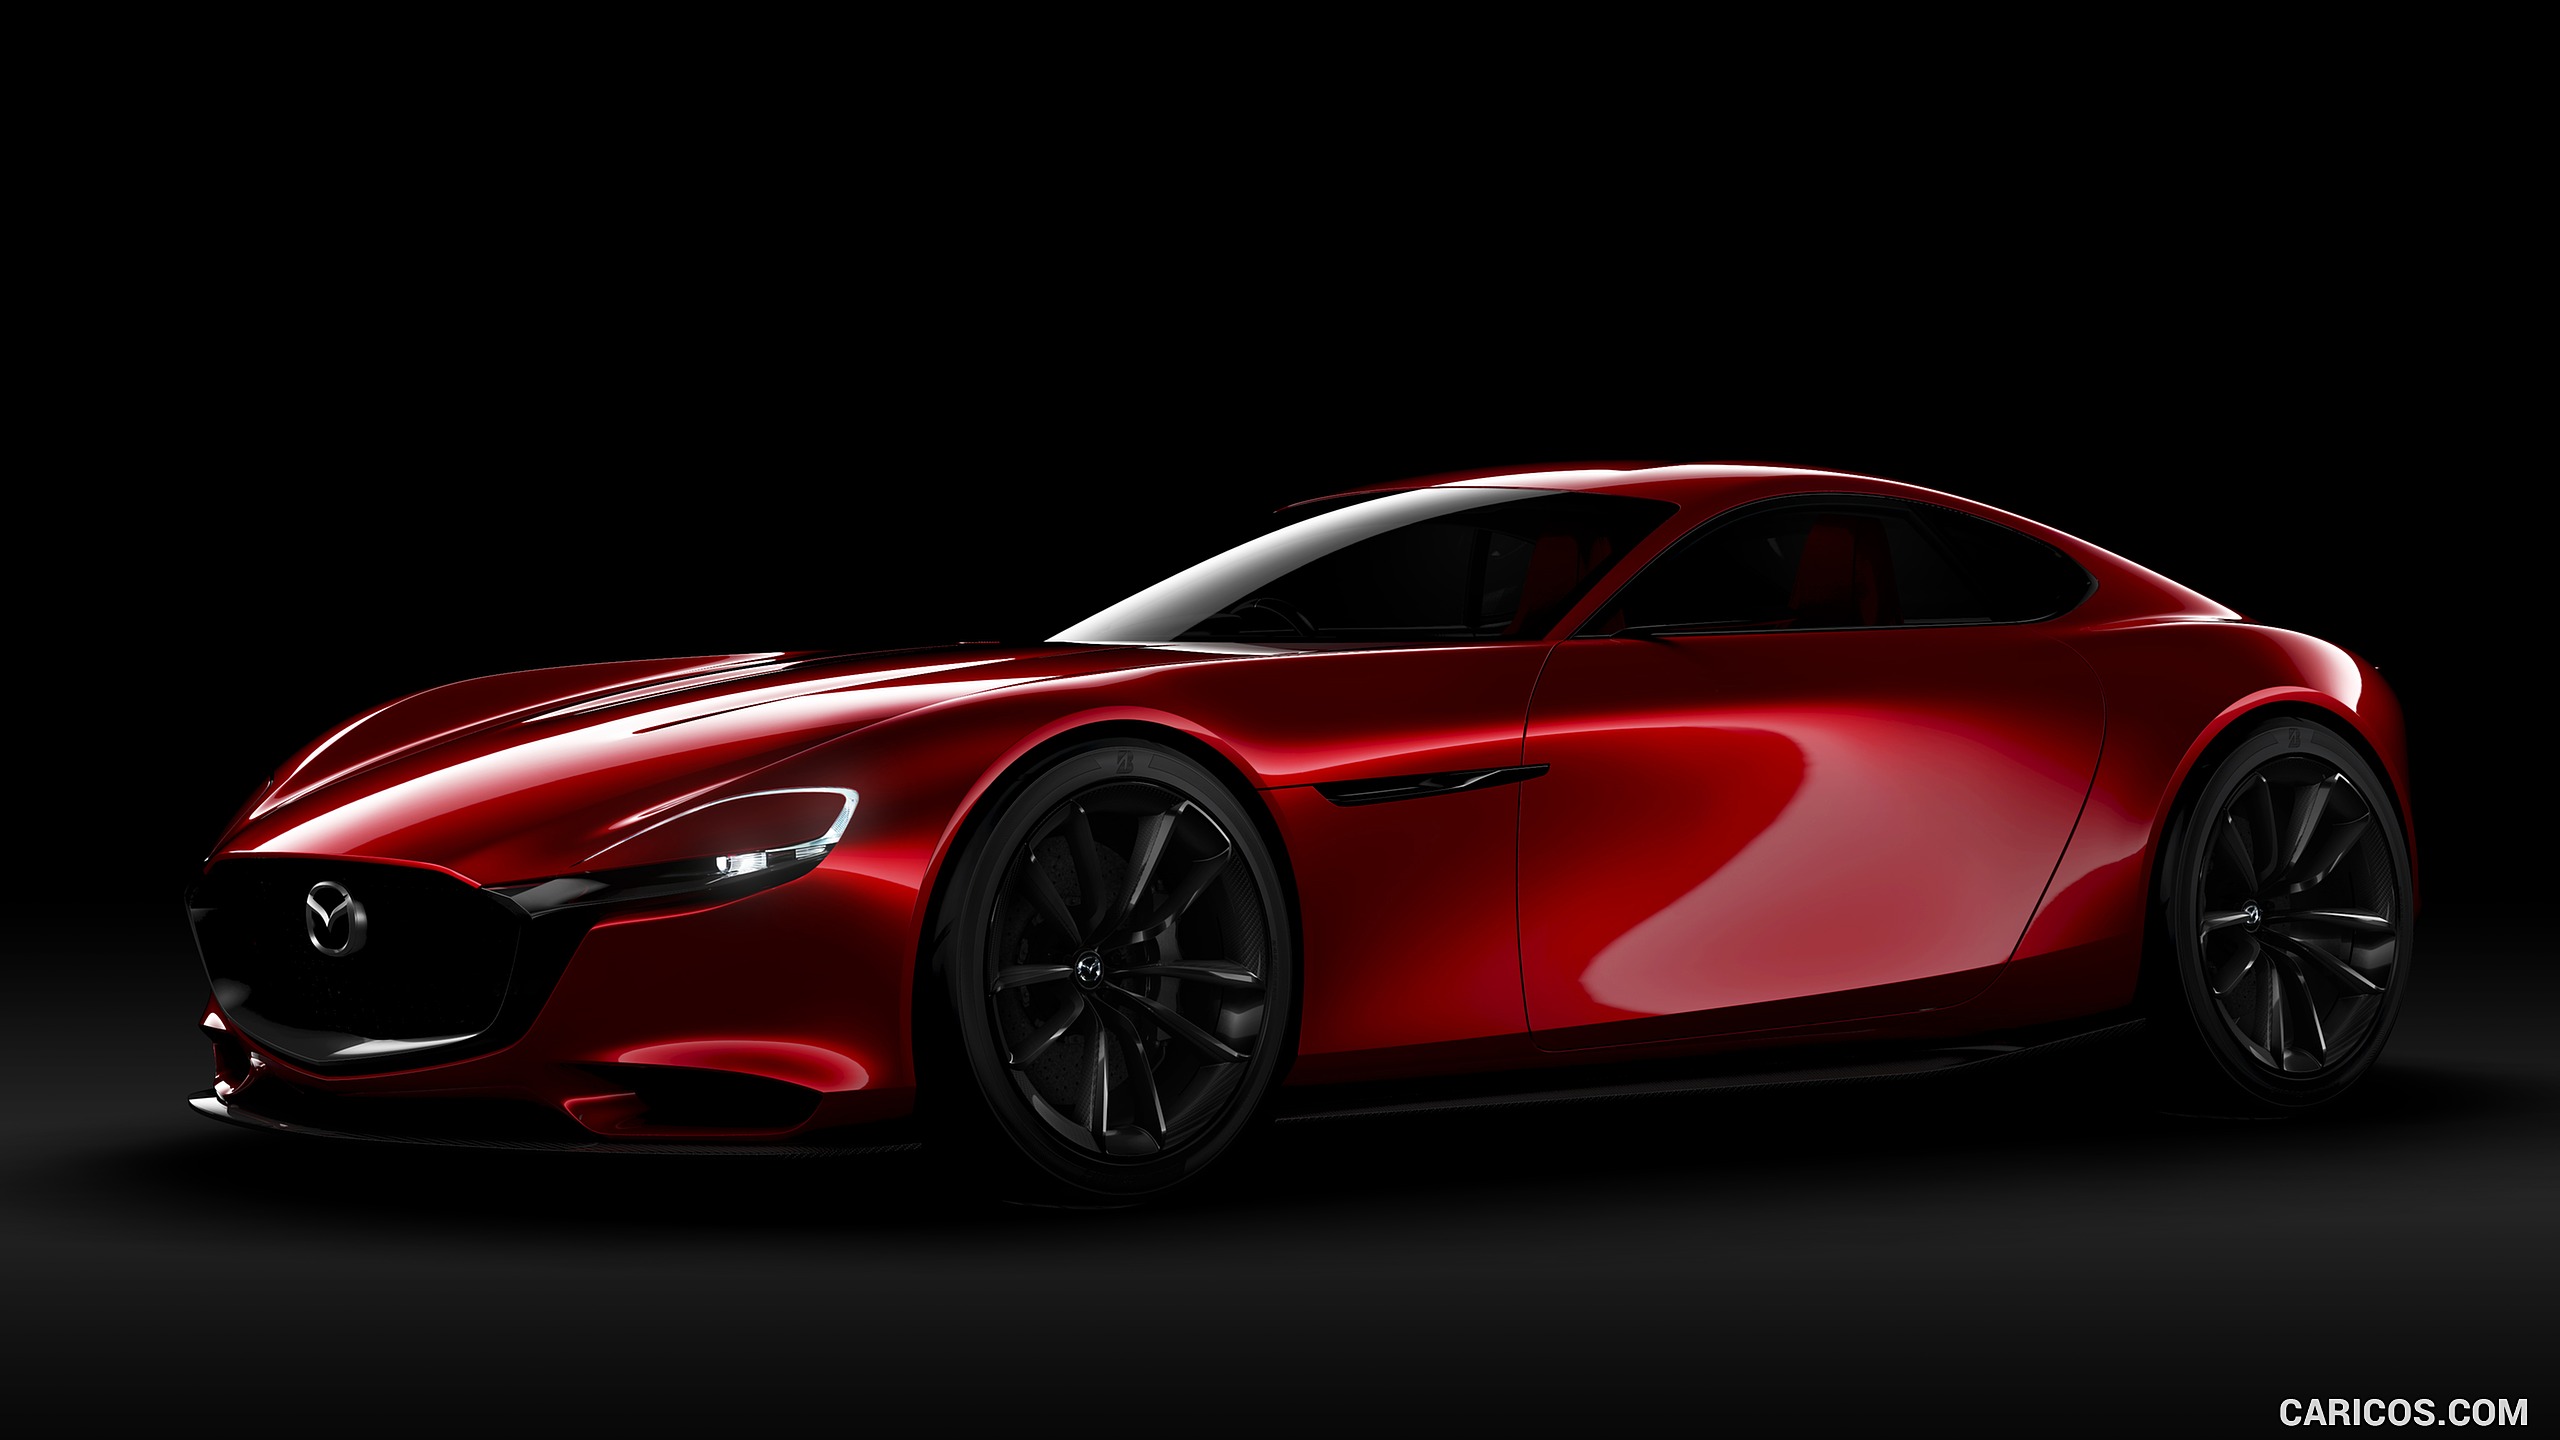 2015 Mazda RX-VISION Concept - Side, #5 of 16